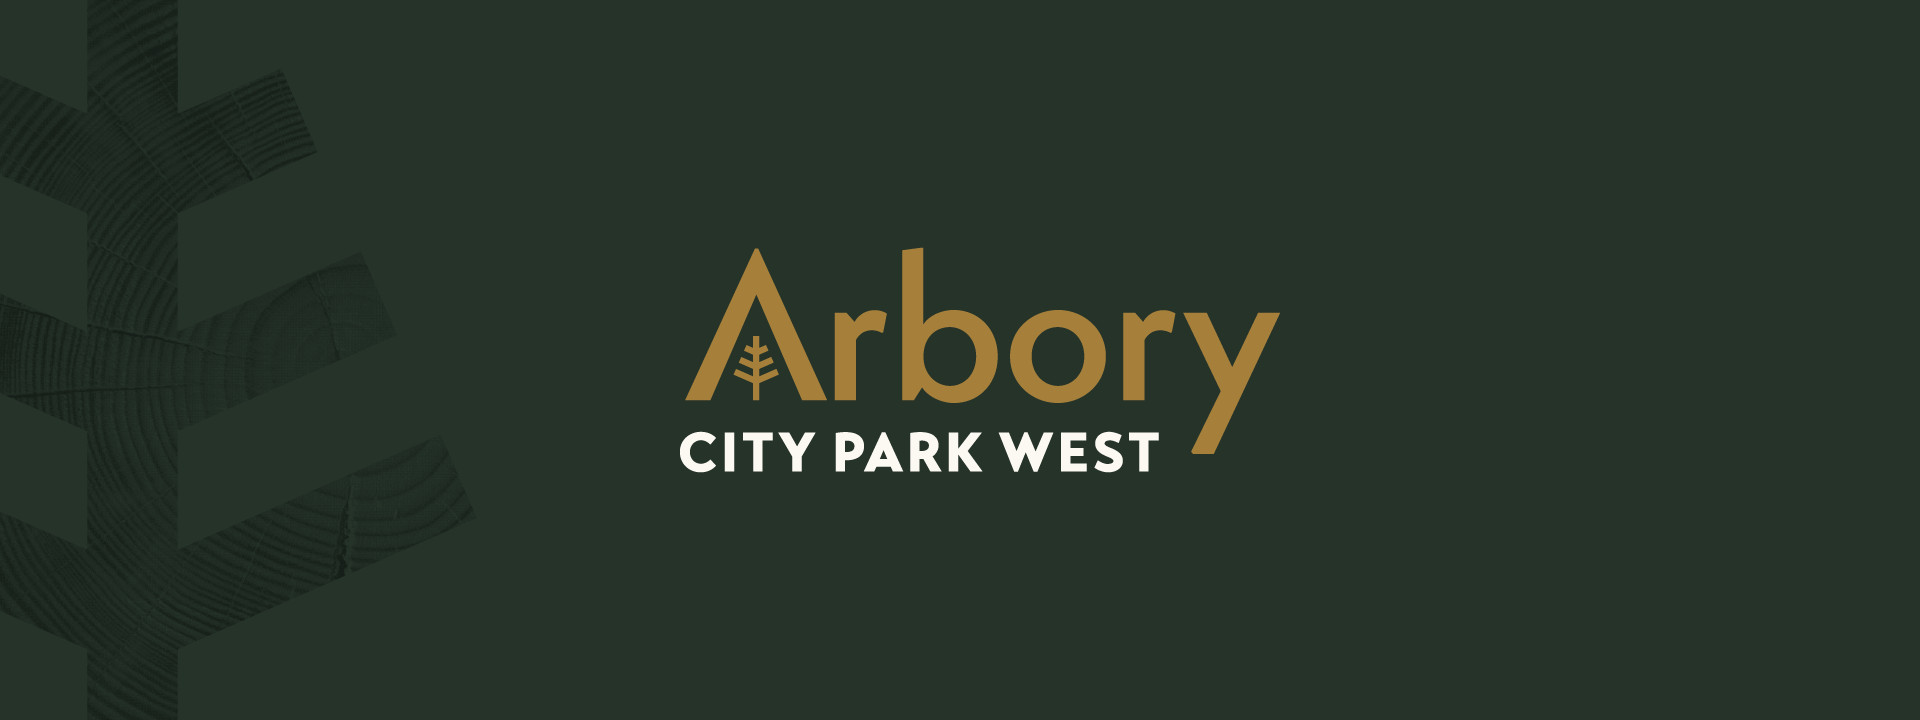 The Arbory Brand Identity